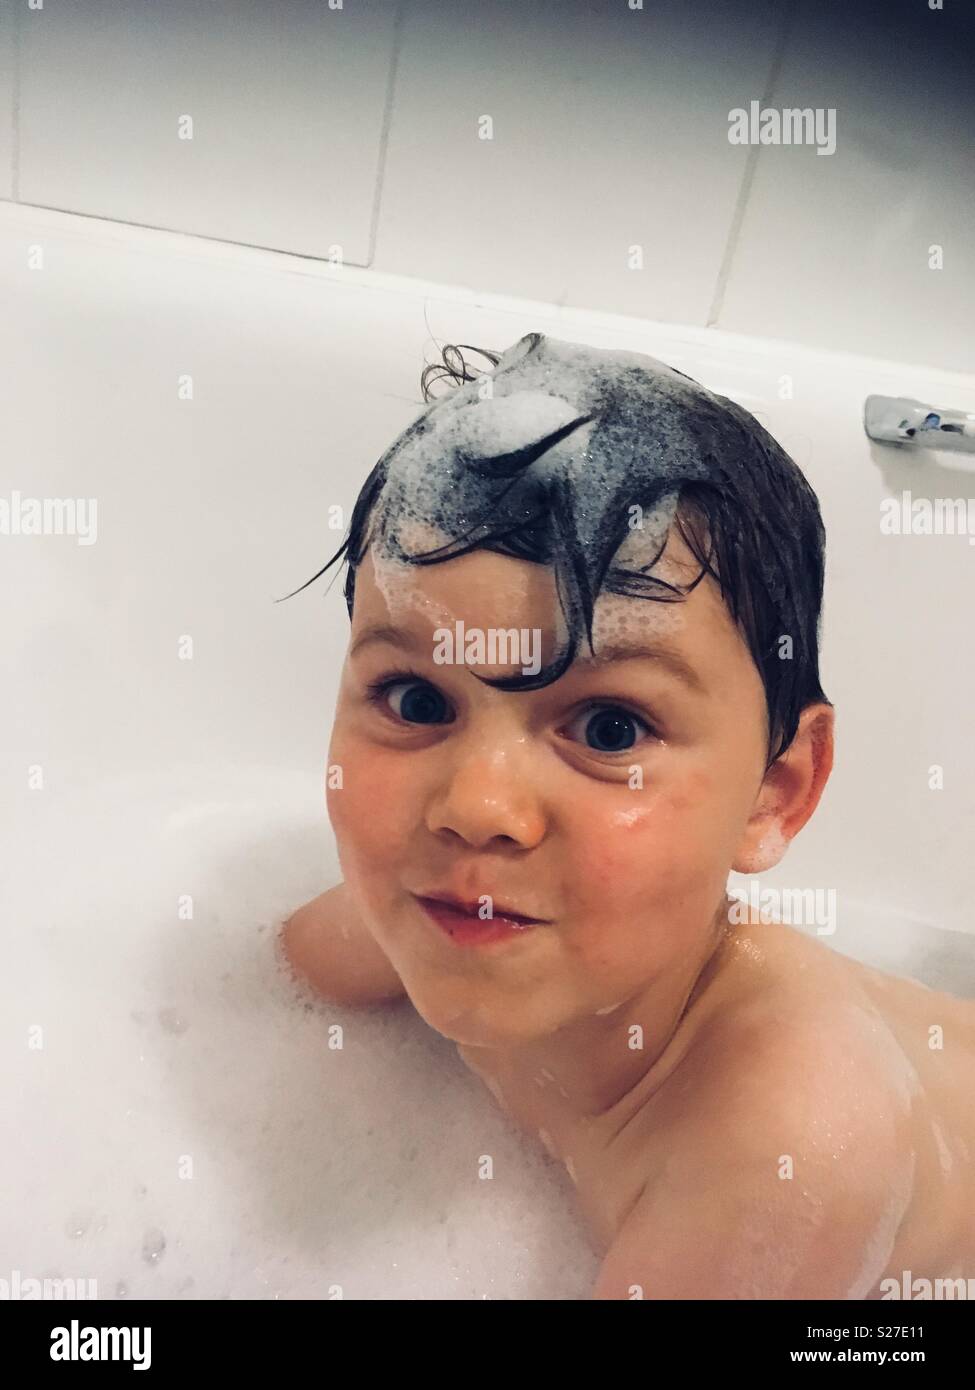 Cheeky boy in bath Stock Photo